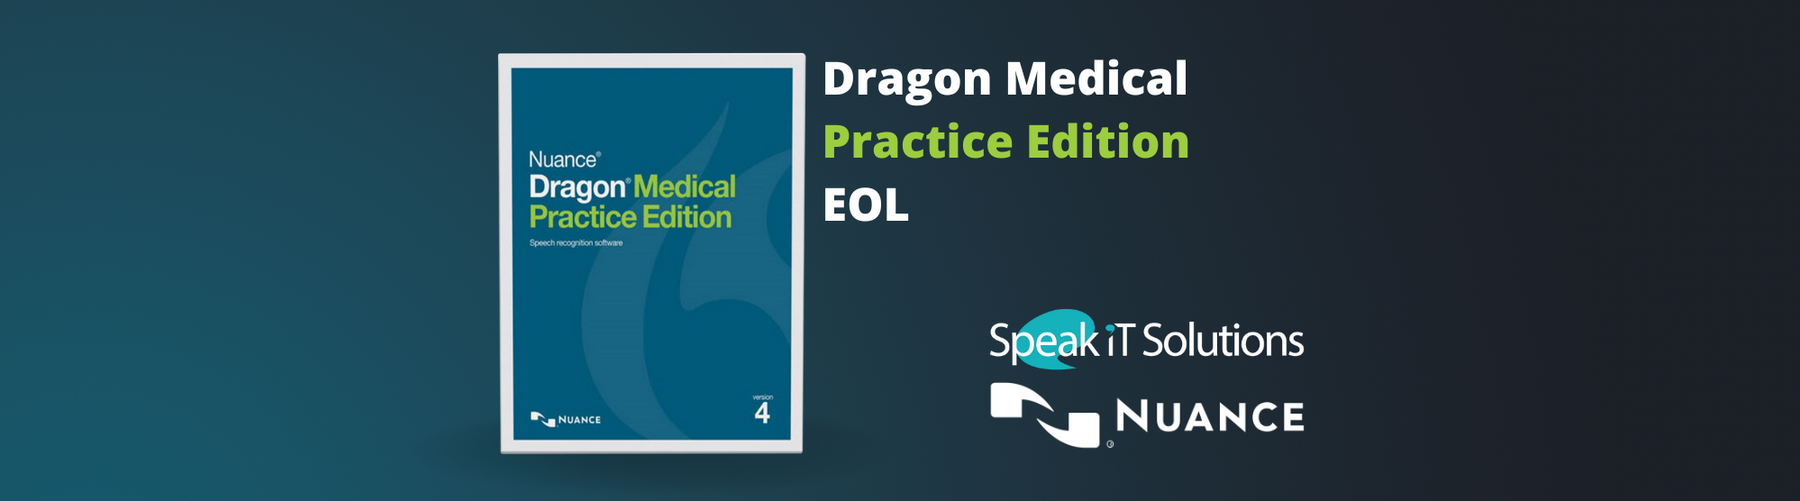 Dragon Medical Pratice Edition End of Life